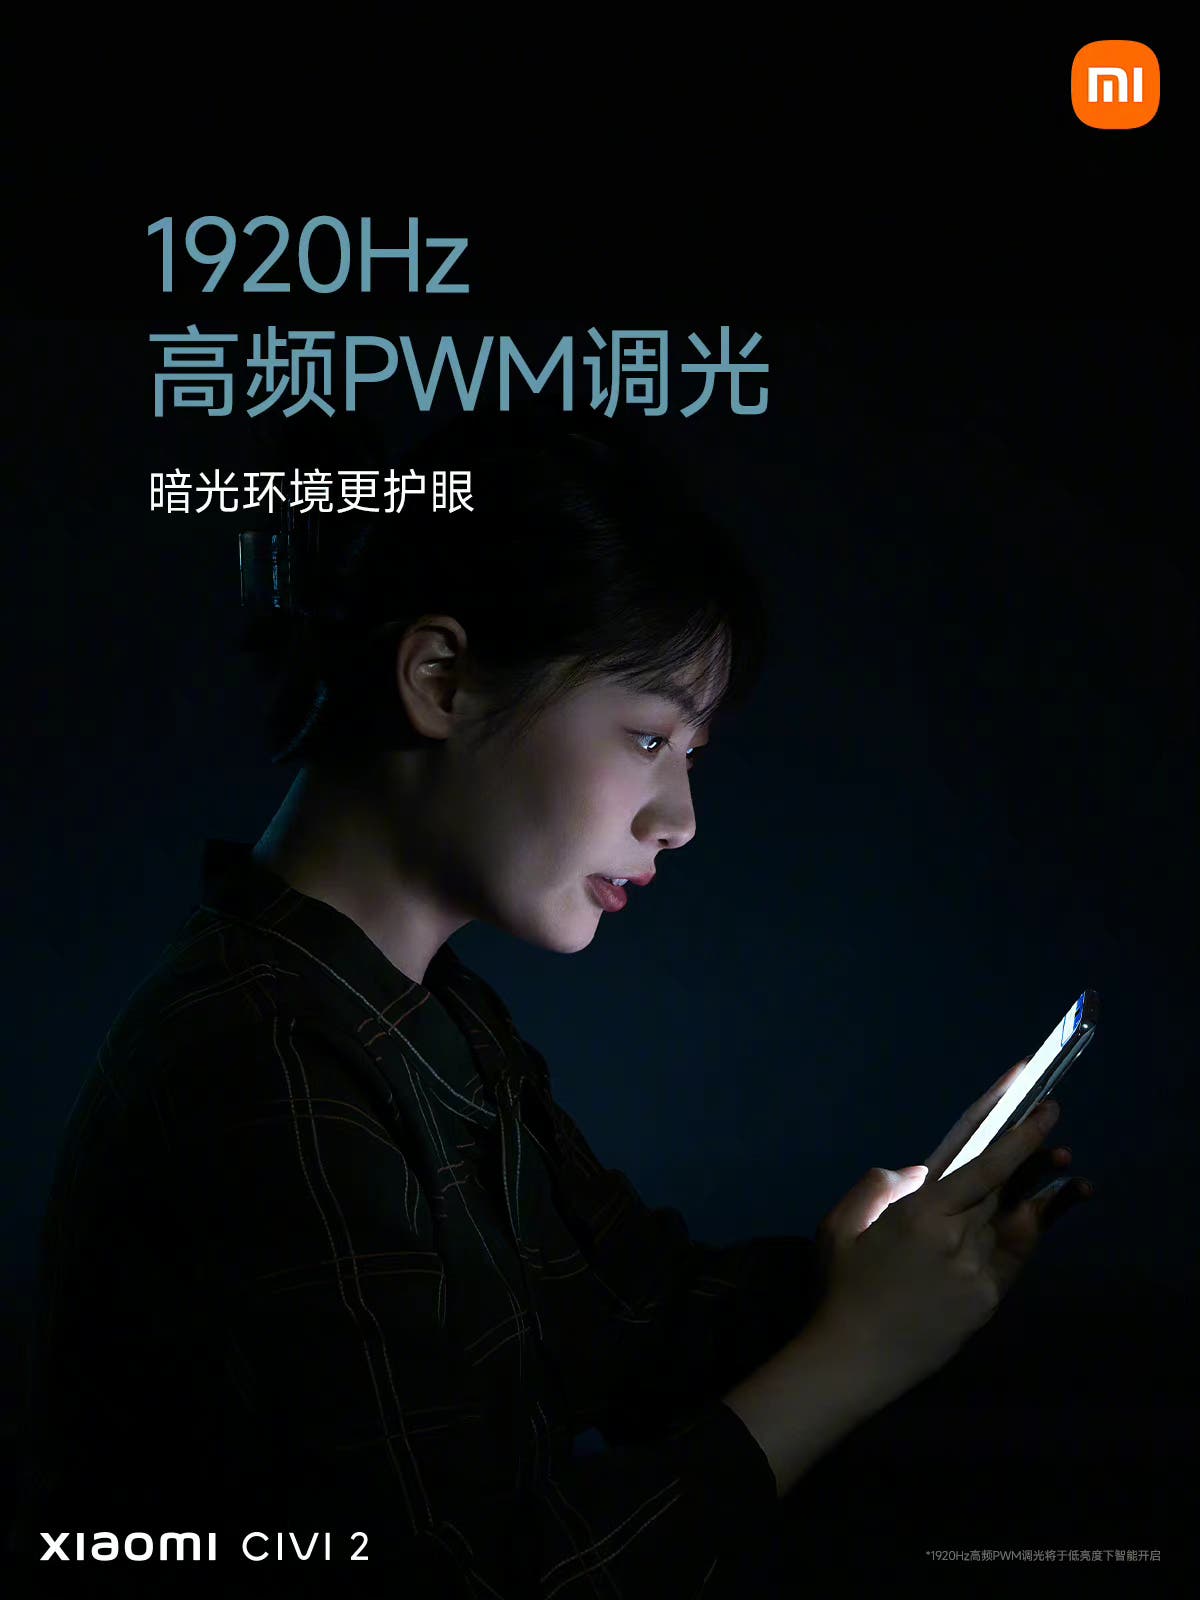 Xiaomi Civi 2 dimming